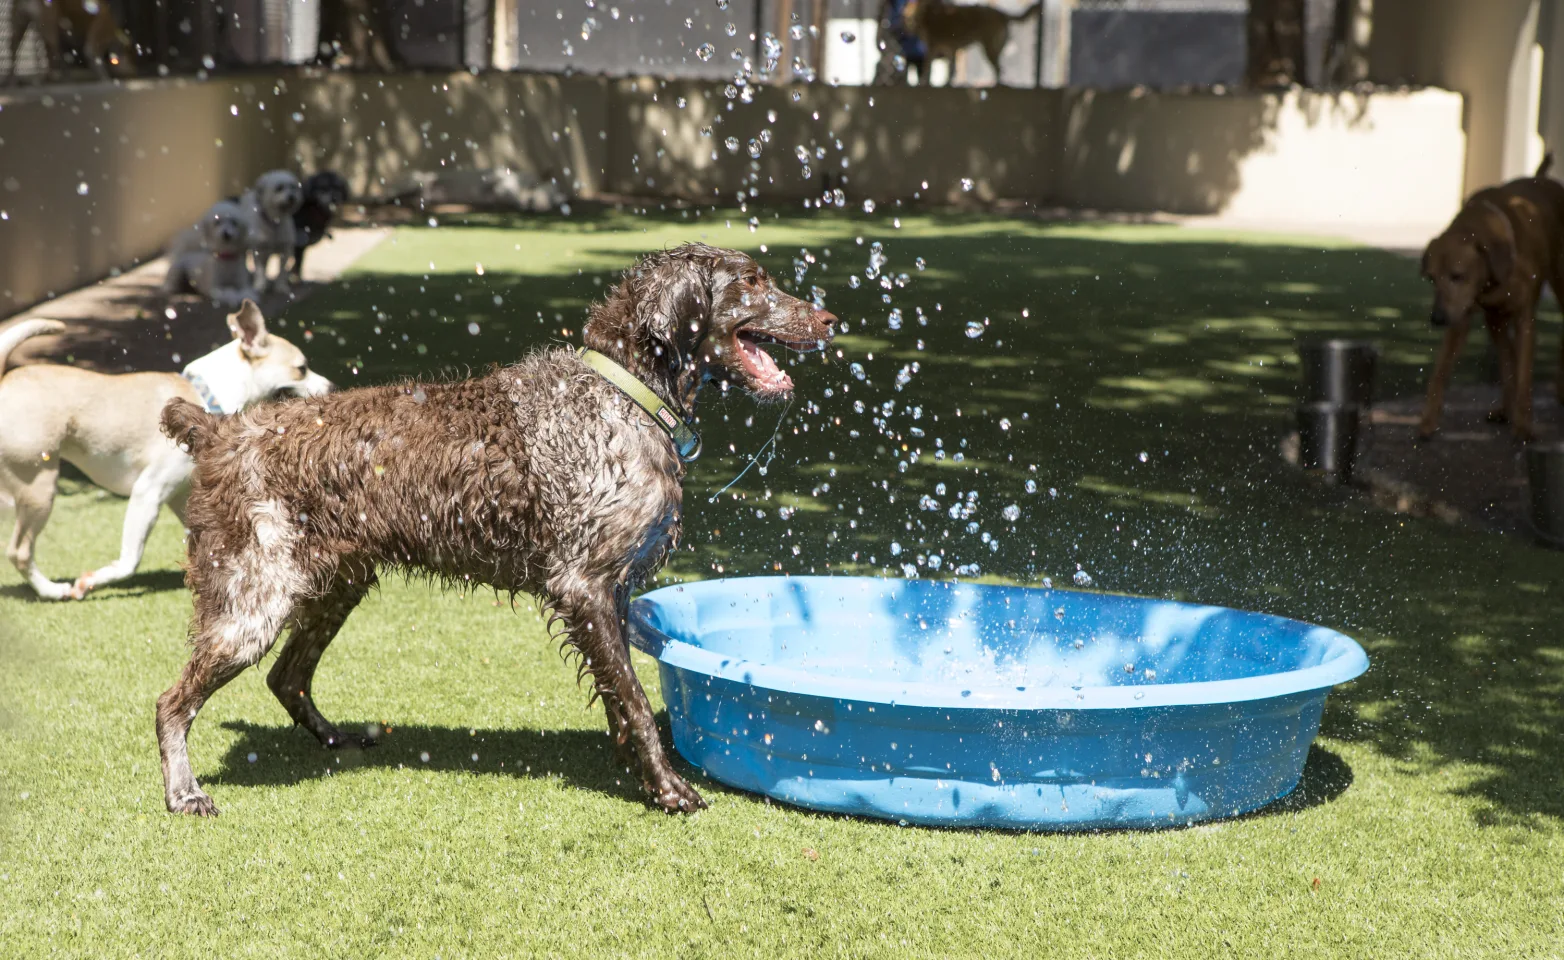 Dogs having fun splashing around with plastic play pool.